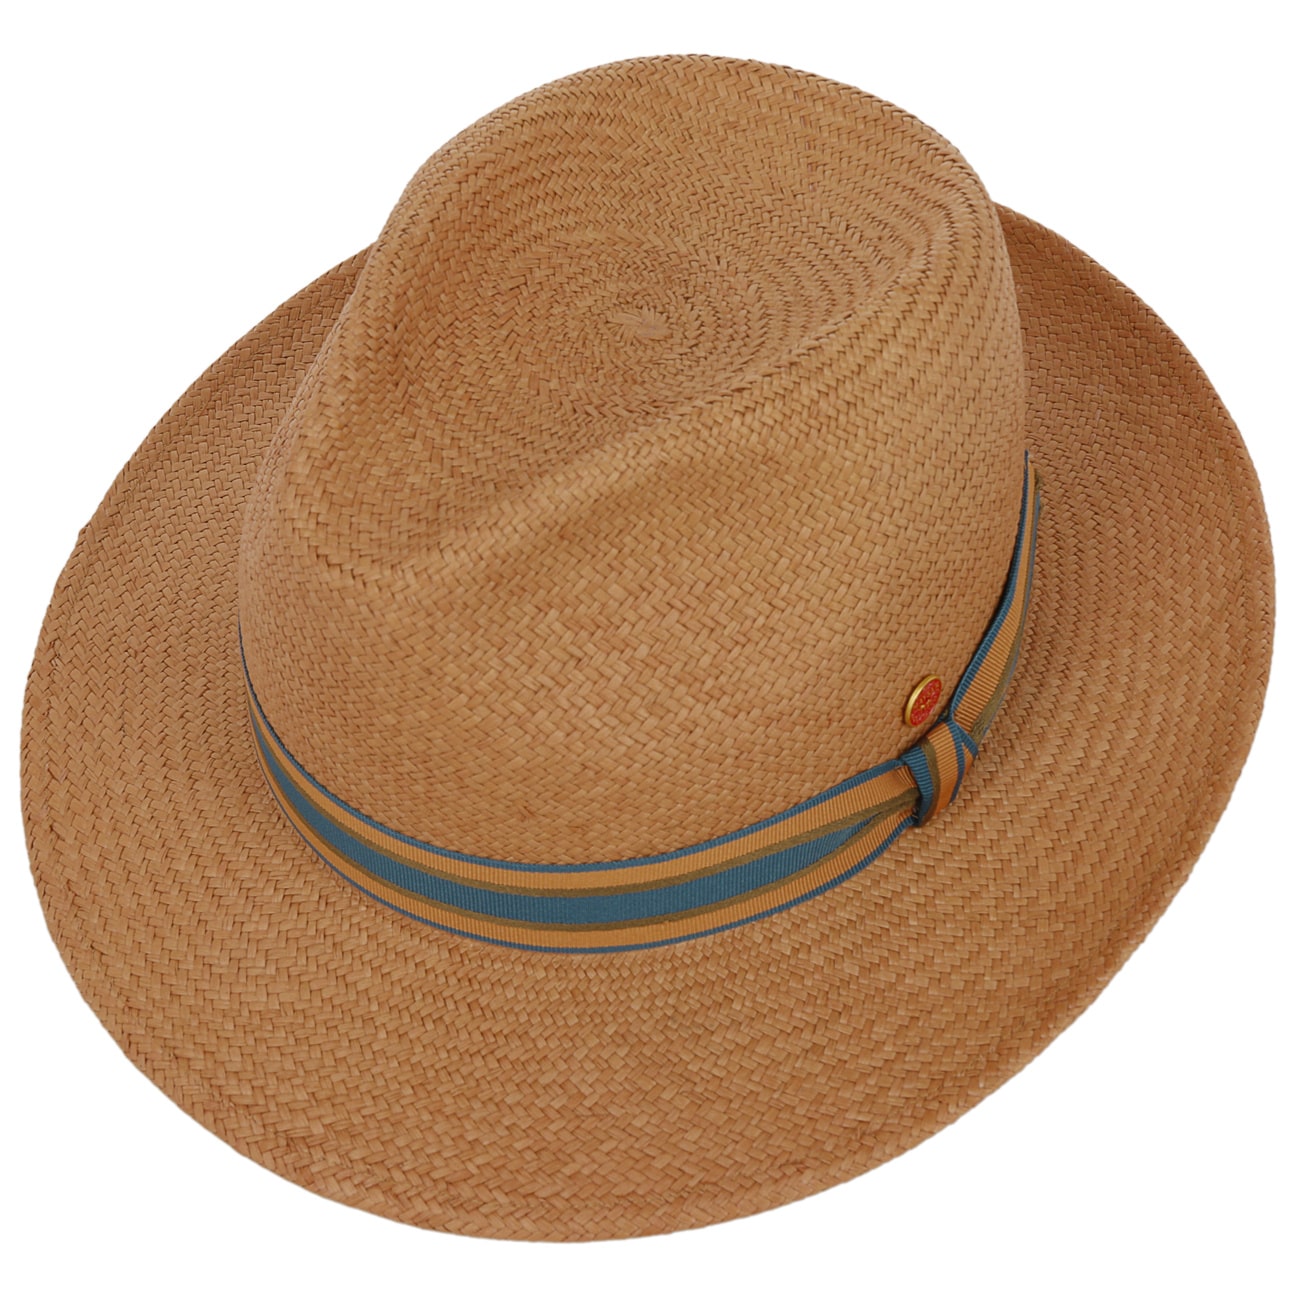 Torino Striped Band Panama Hat by Mayser - 175,95 €